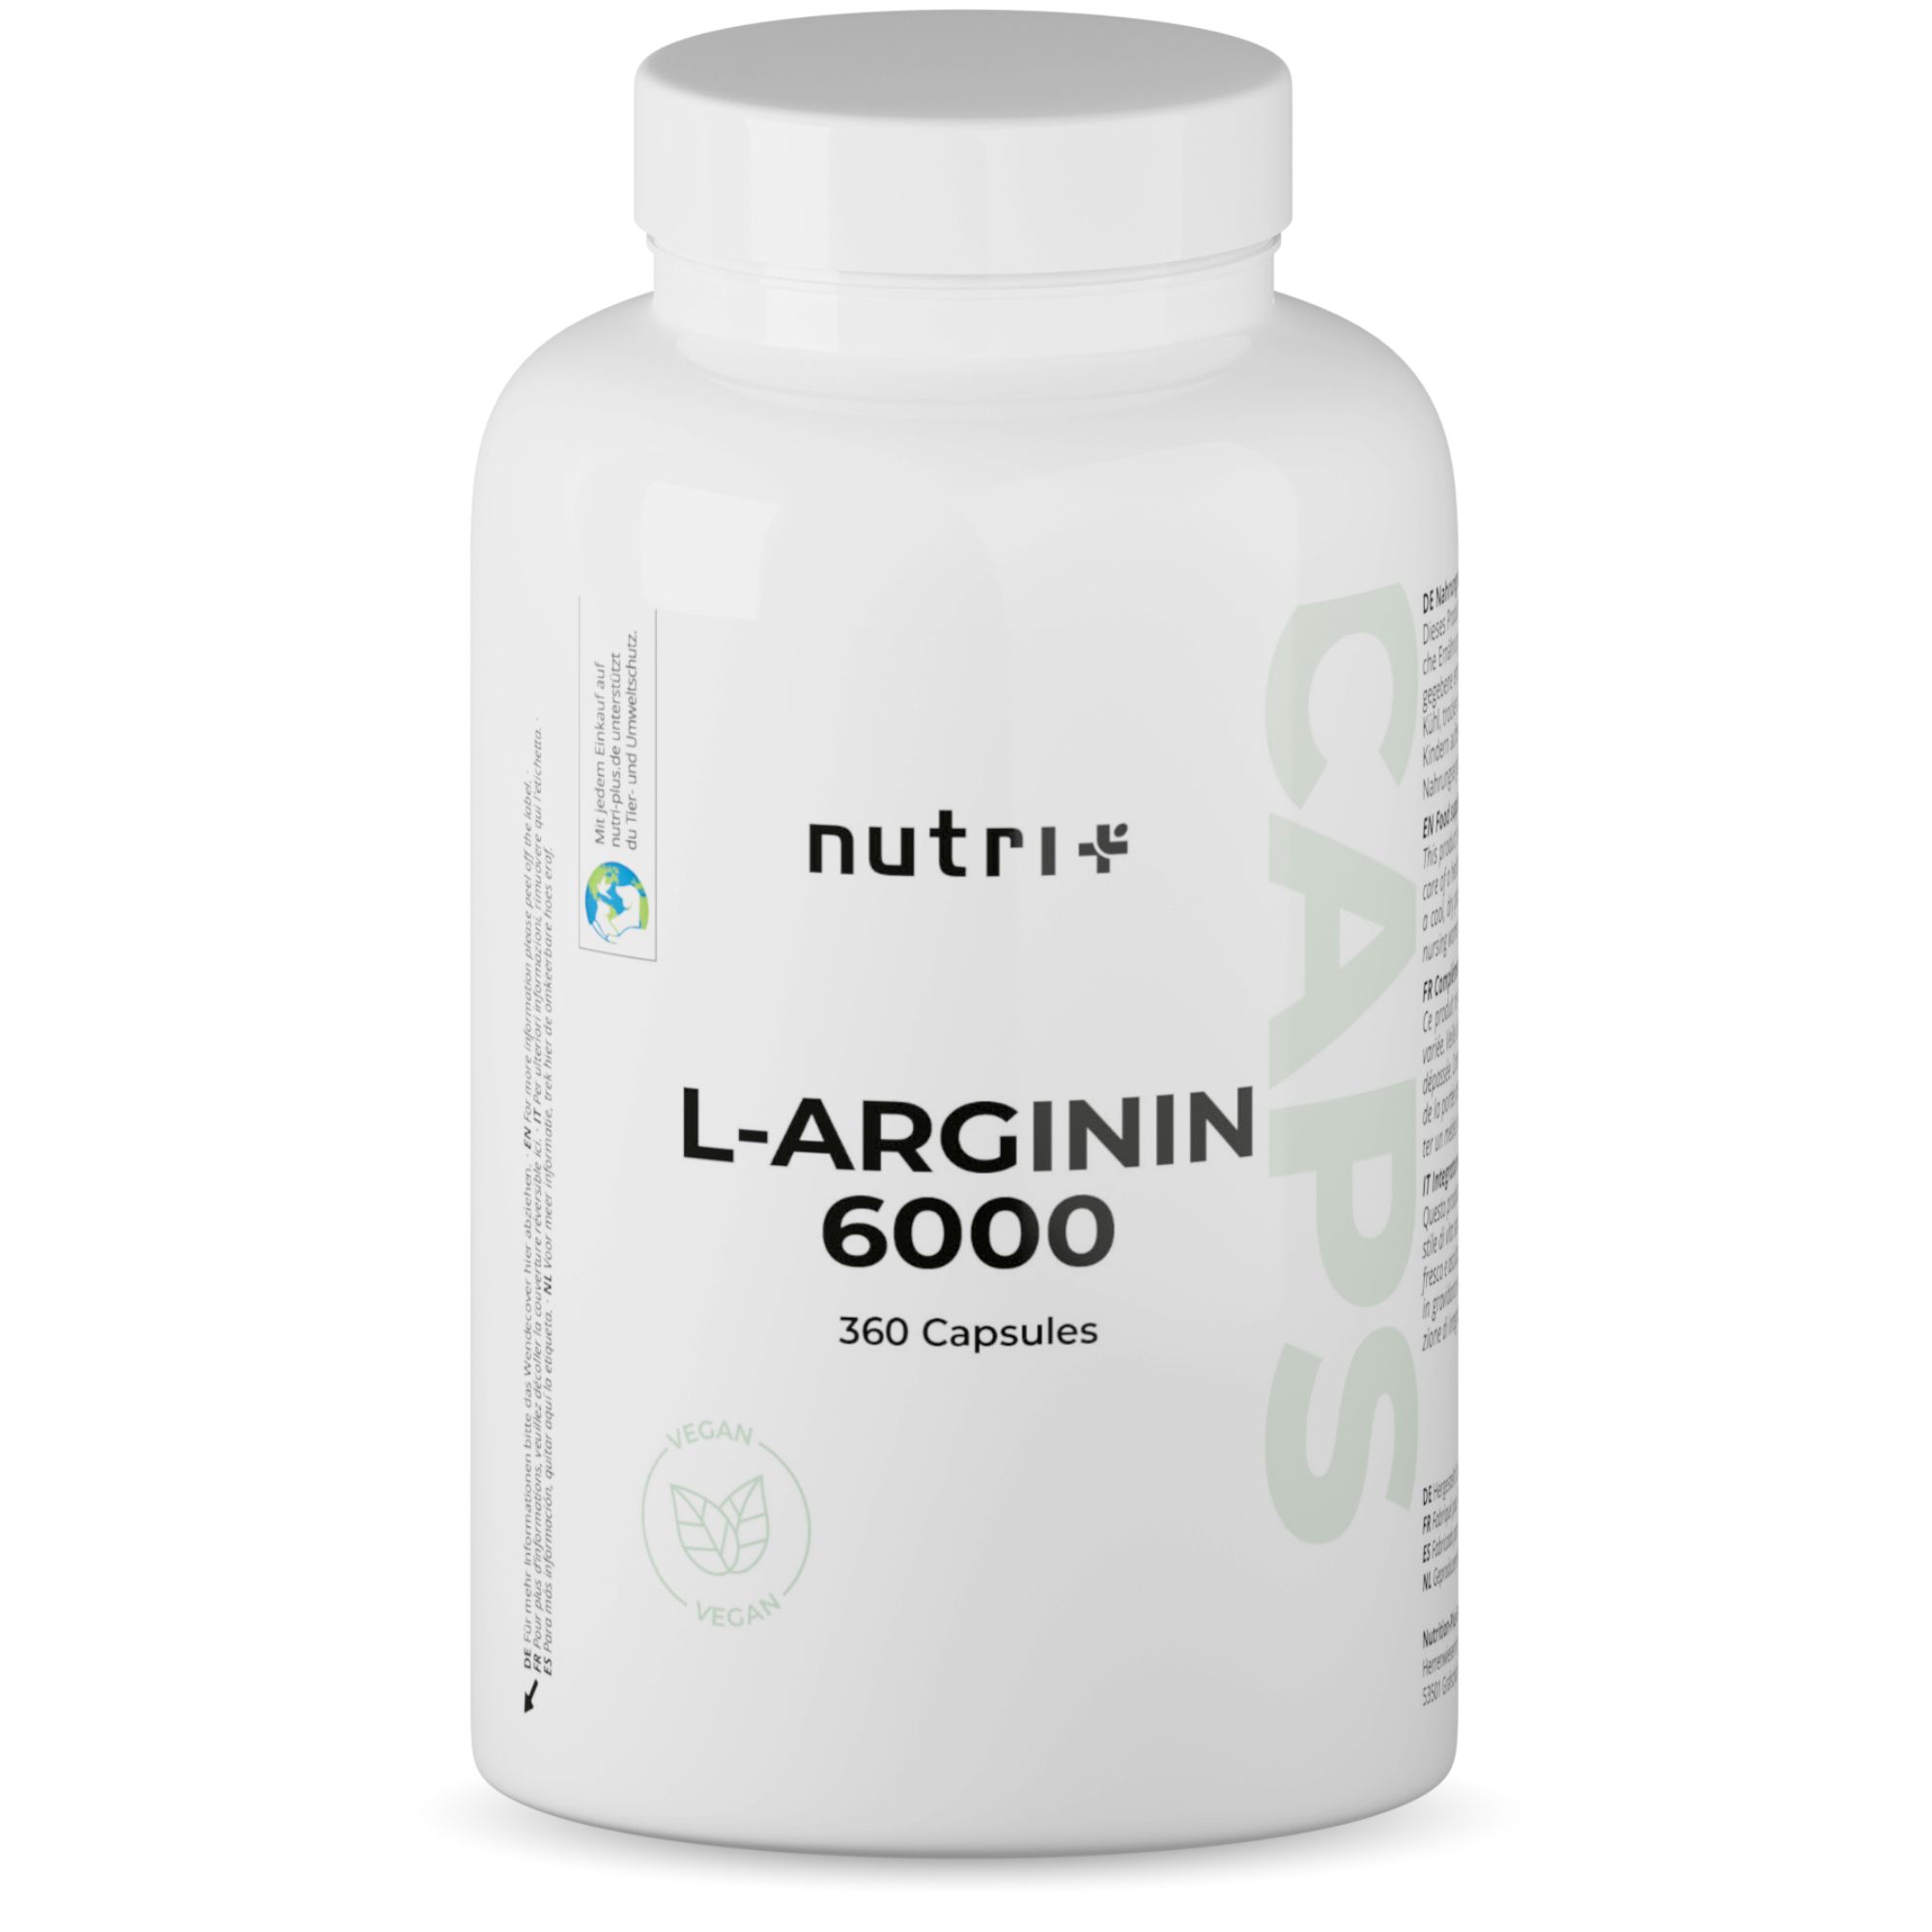 Nutri+ - L-Arginin